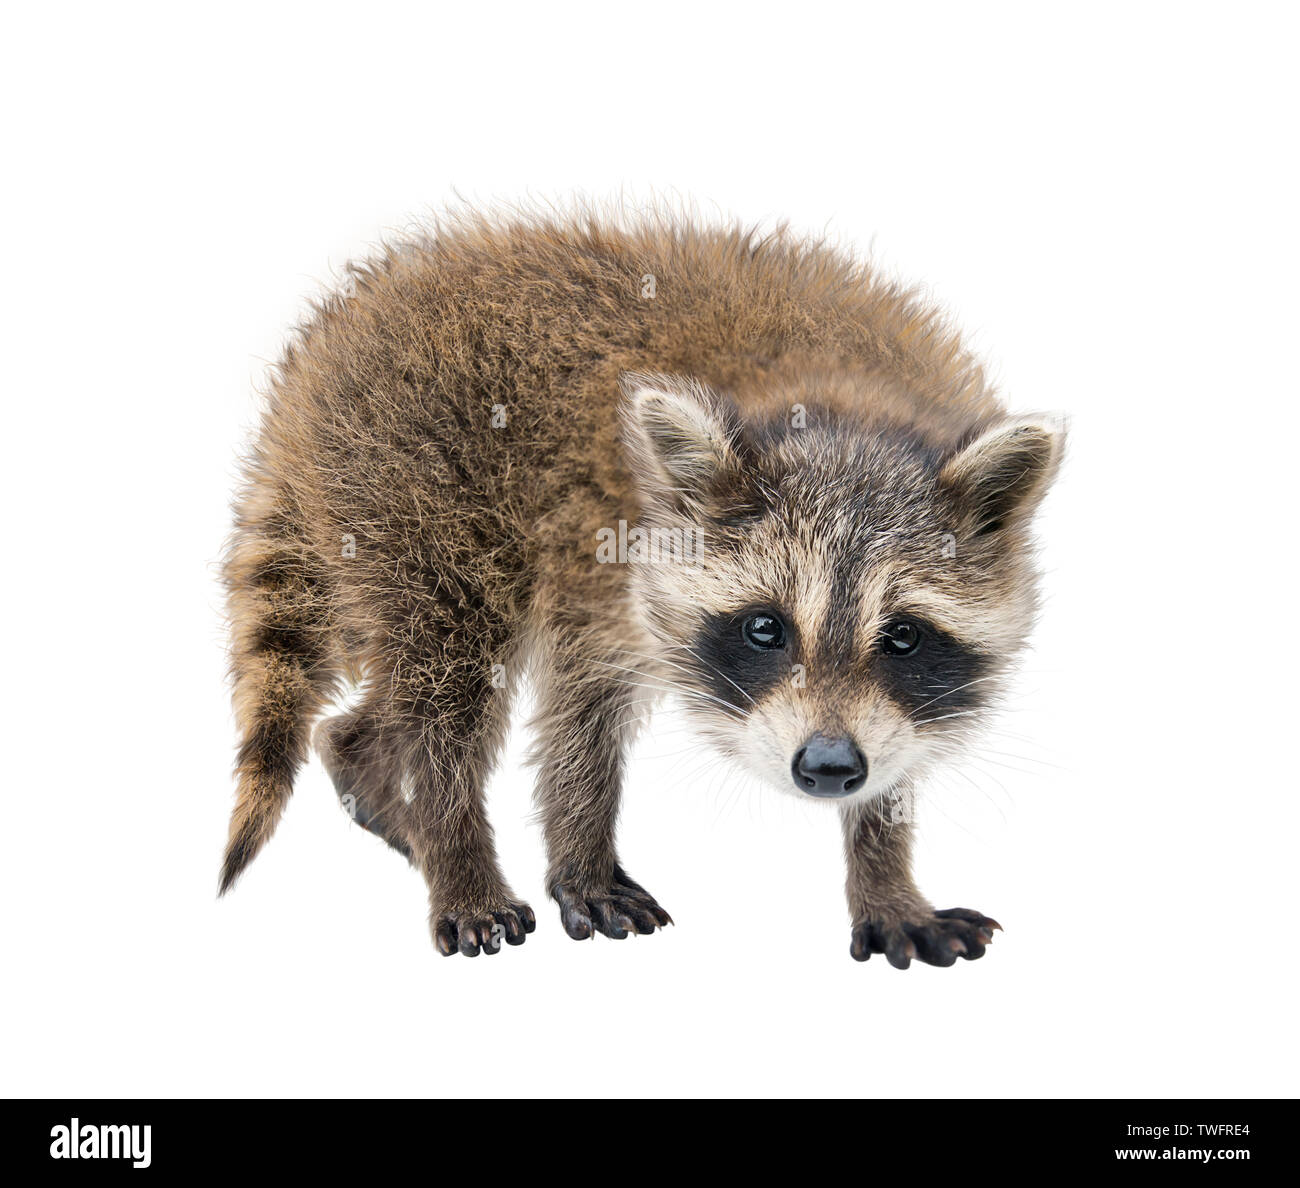 Baby Raccoon portrait  isolated on white background Stock Photo